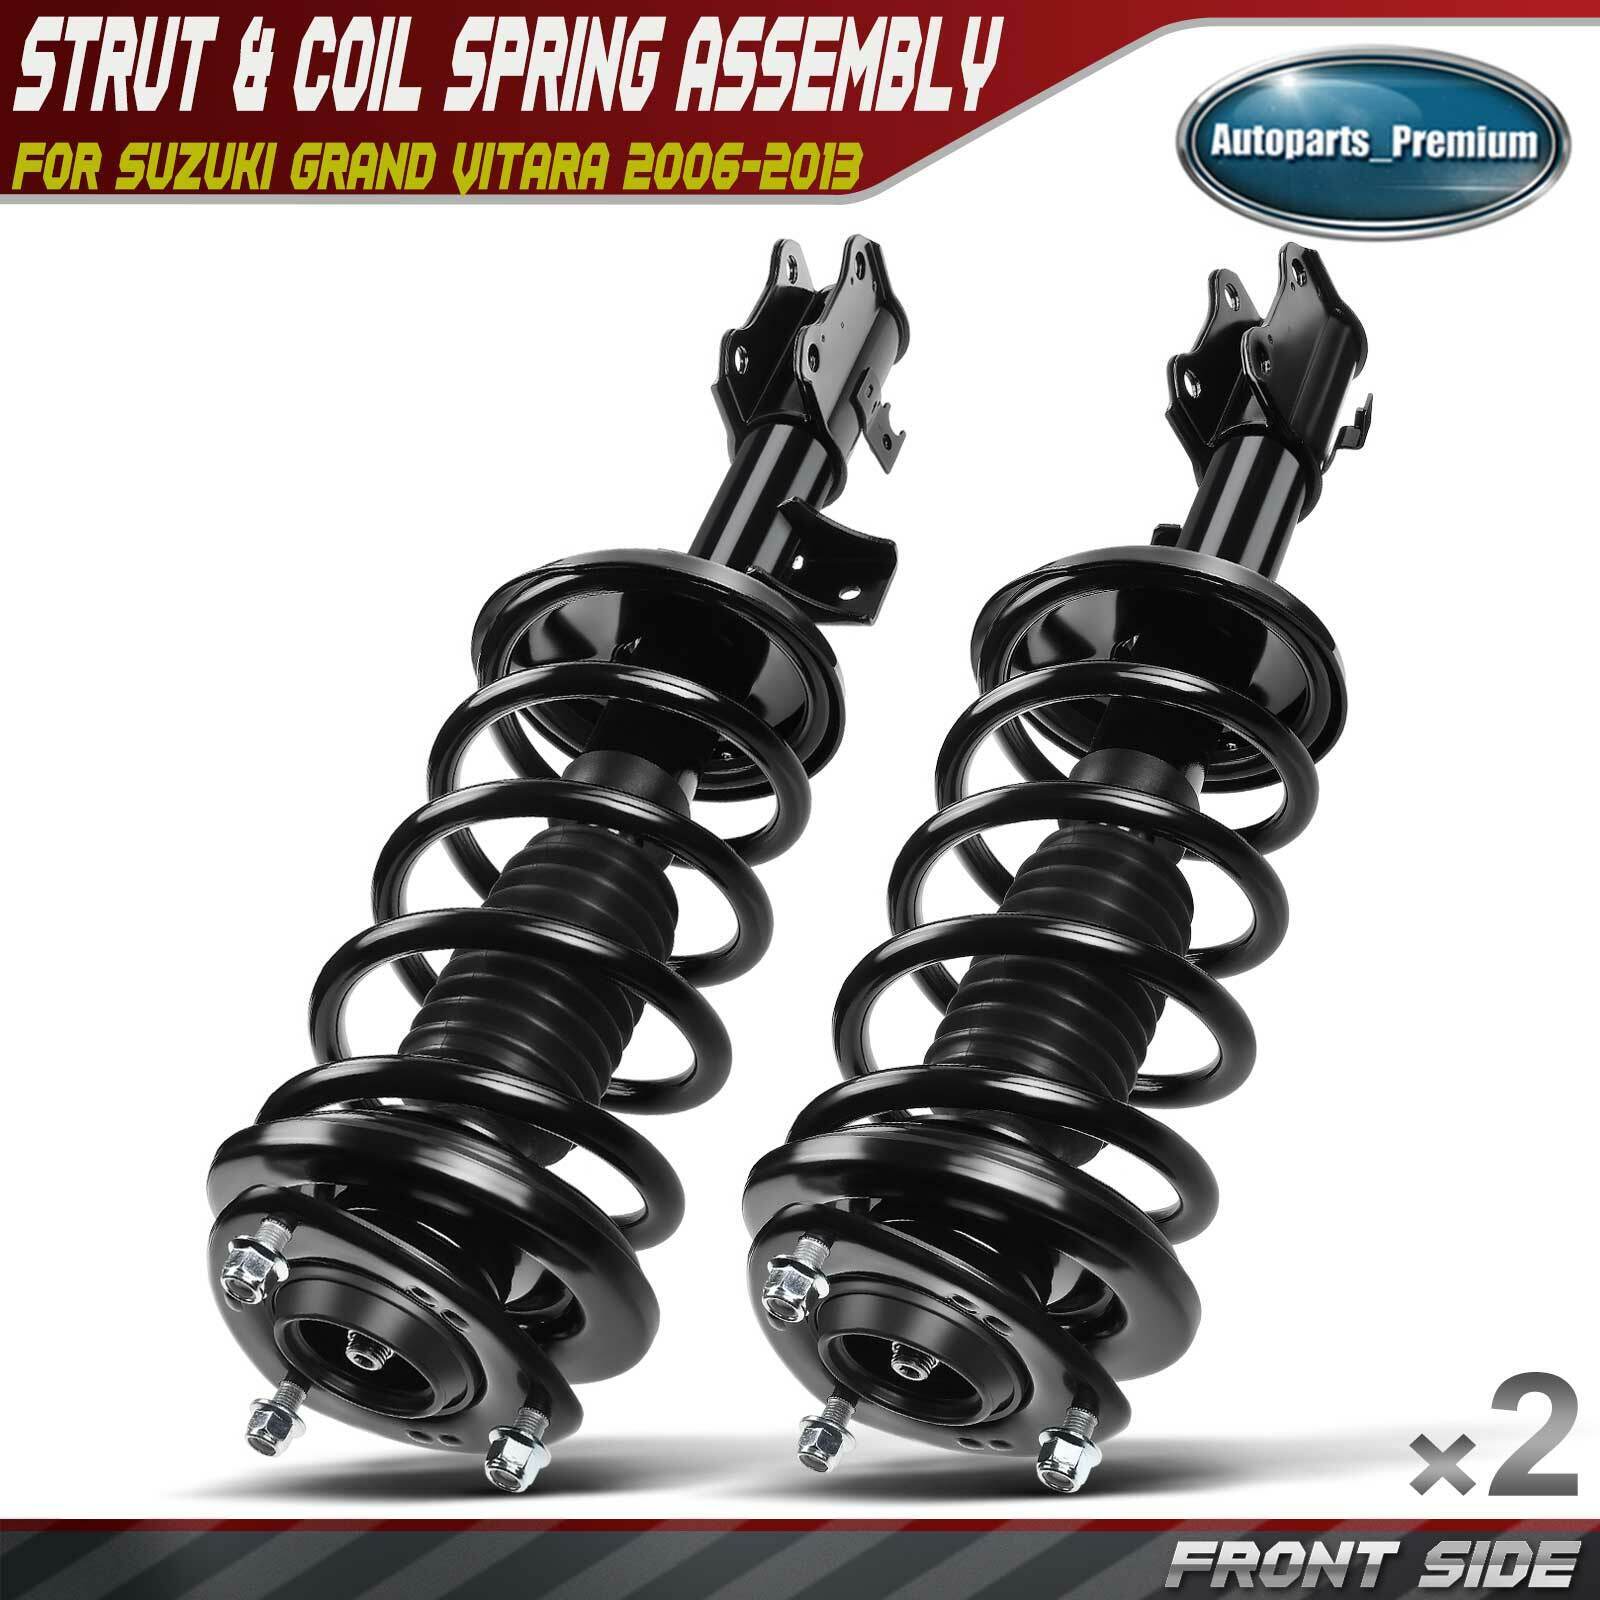 2x Front Complete Strut & Coil Spring Assembly for Suzuki Grand Vitara 2006-2013